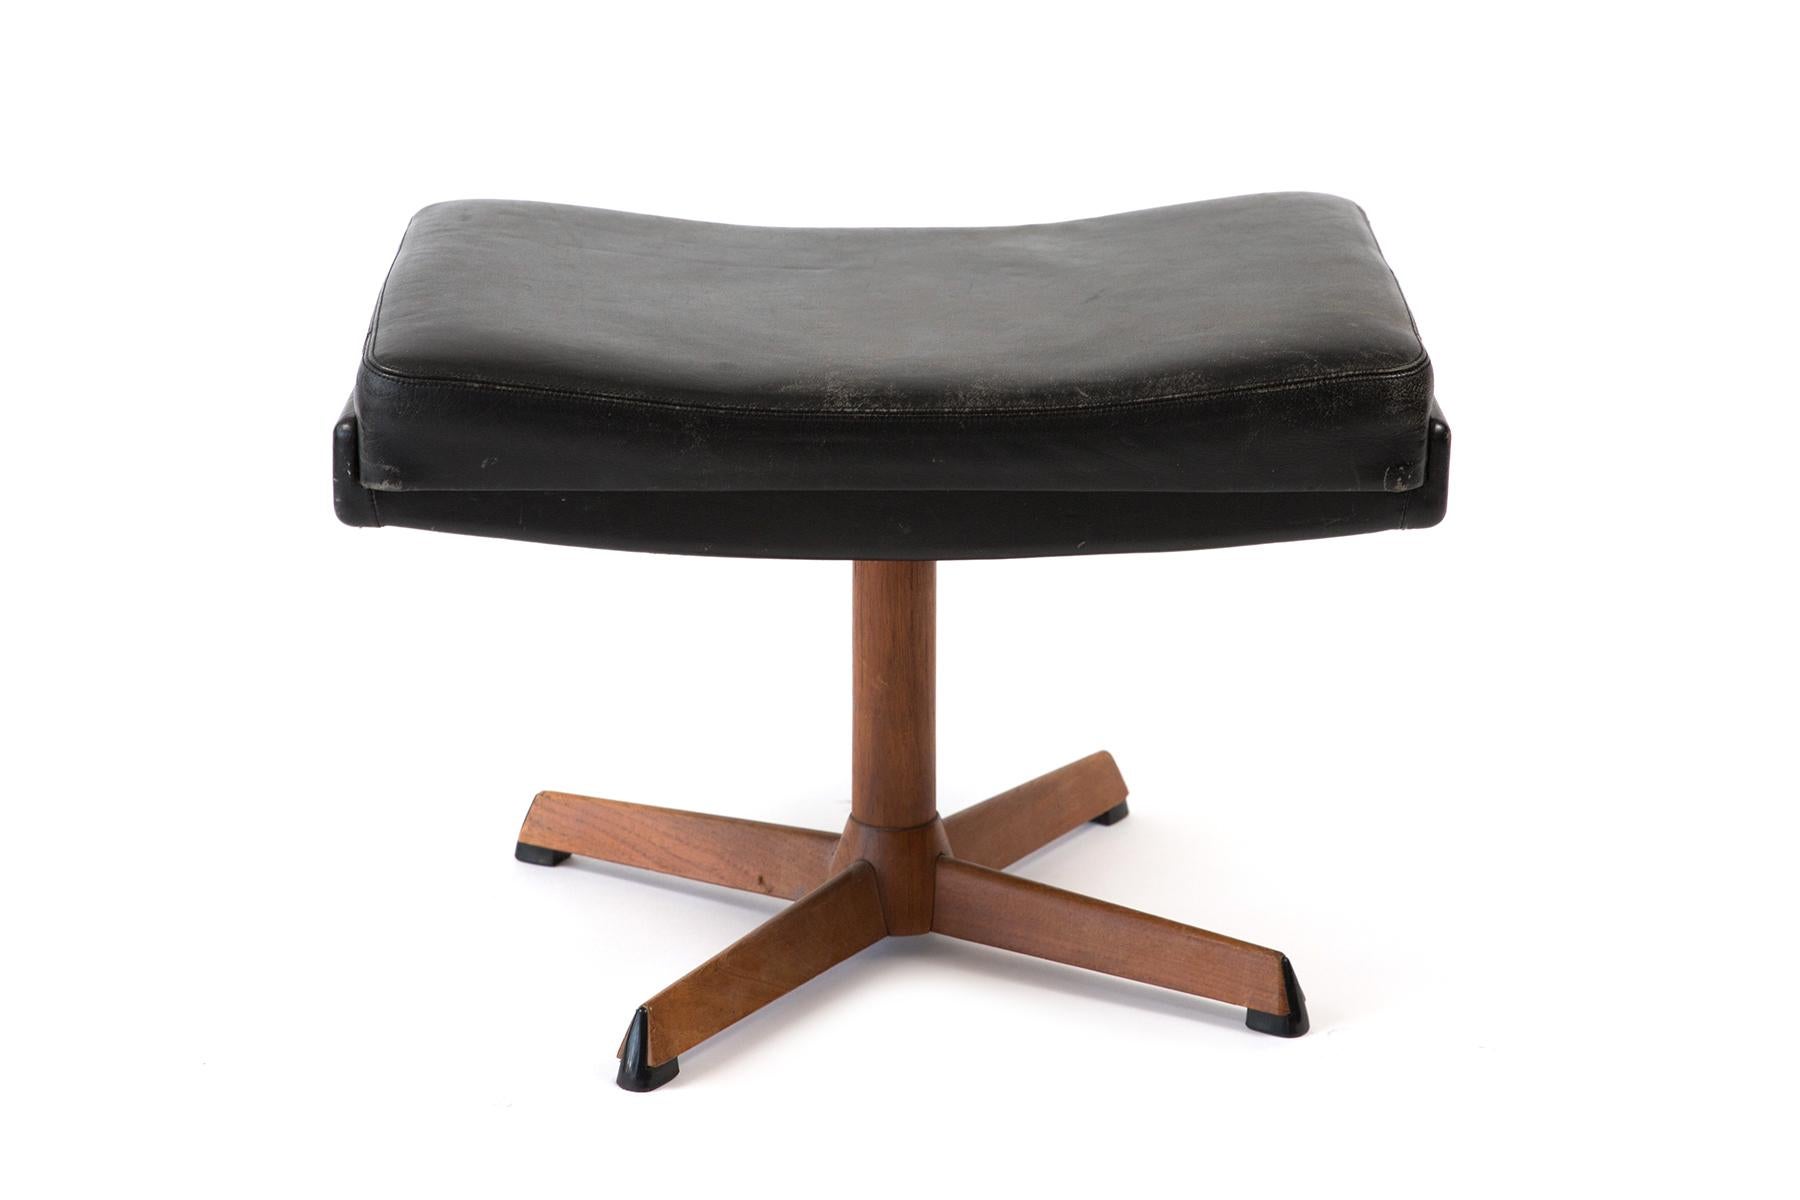 North American Kofod Larsen Leather Teak Lounge Chair and Ottoman